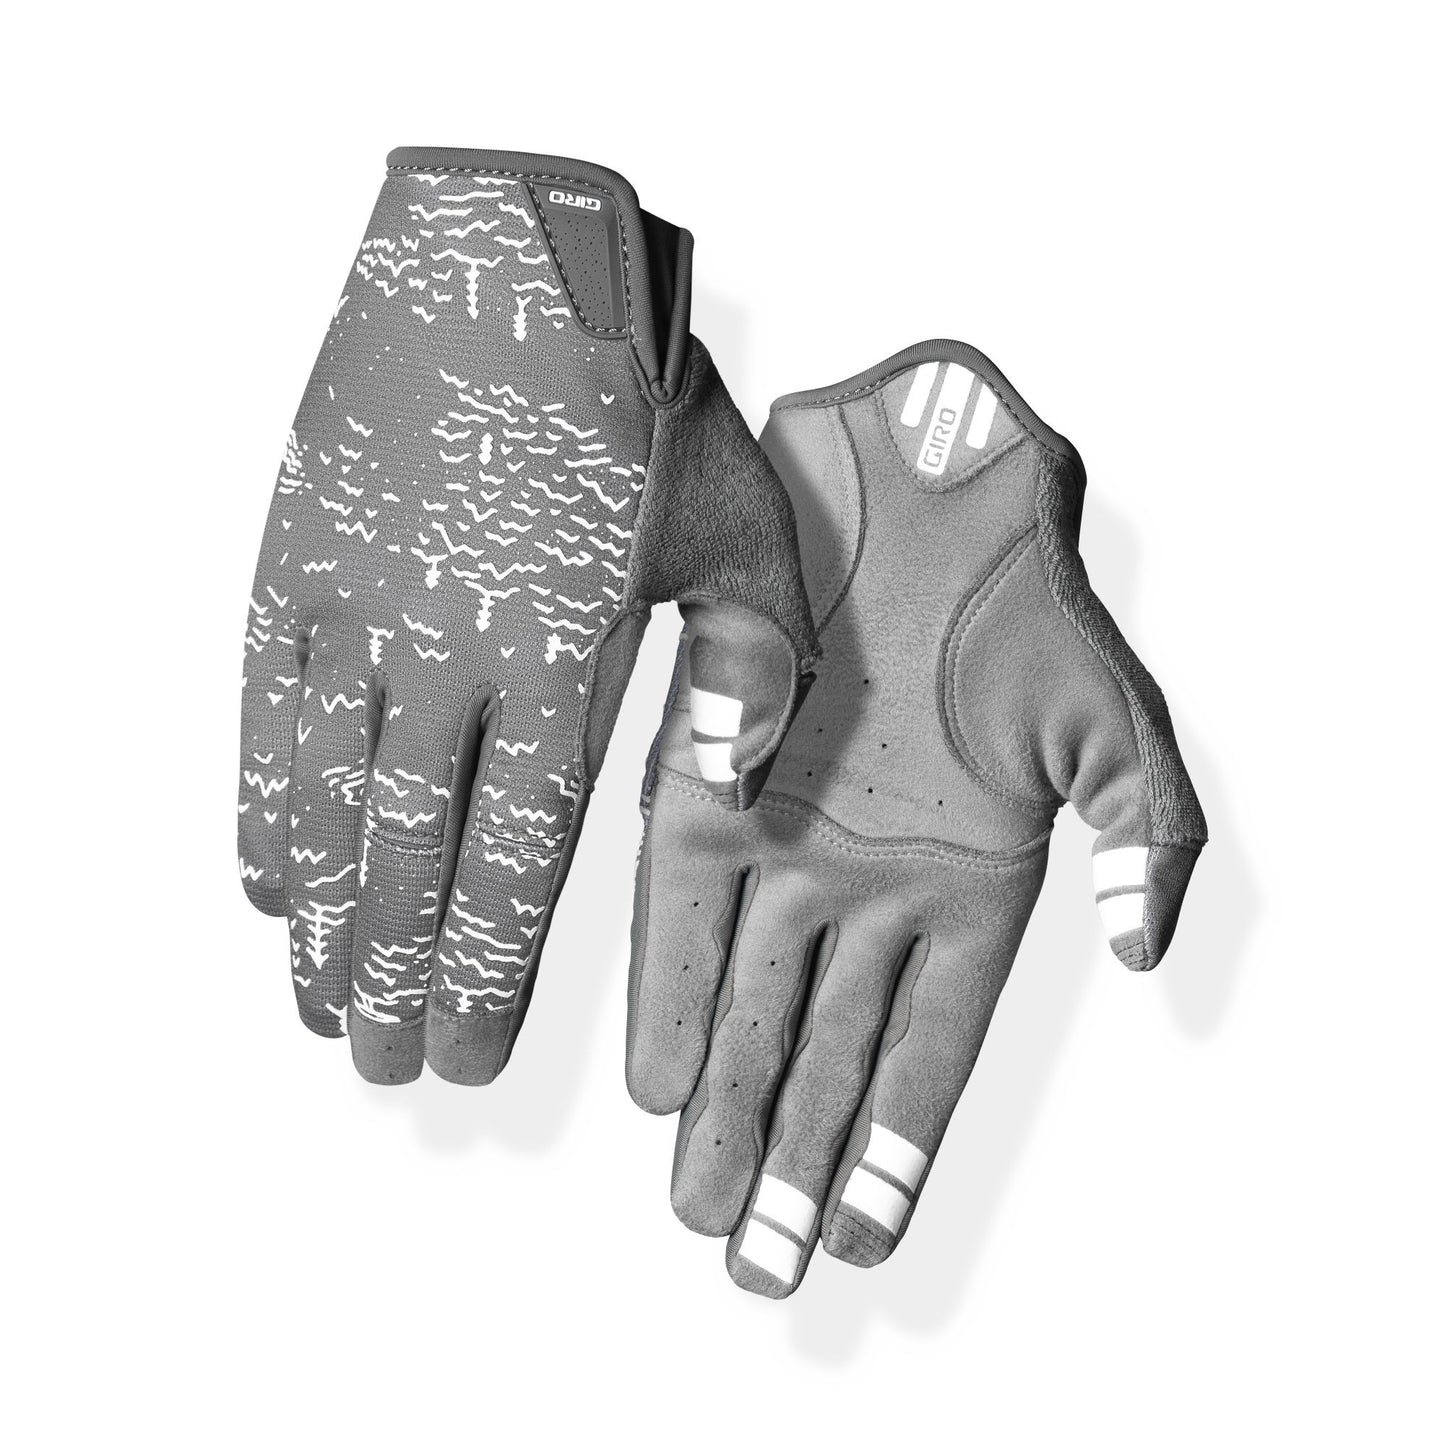 Giro Women's La DND Glove Dark Shadow/White Scree Bike Gloves